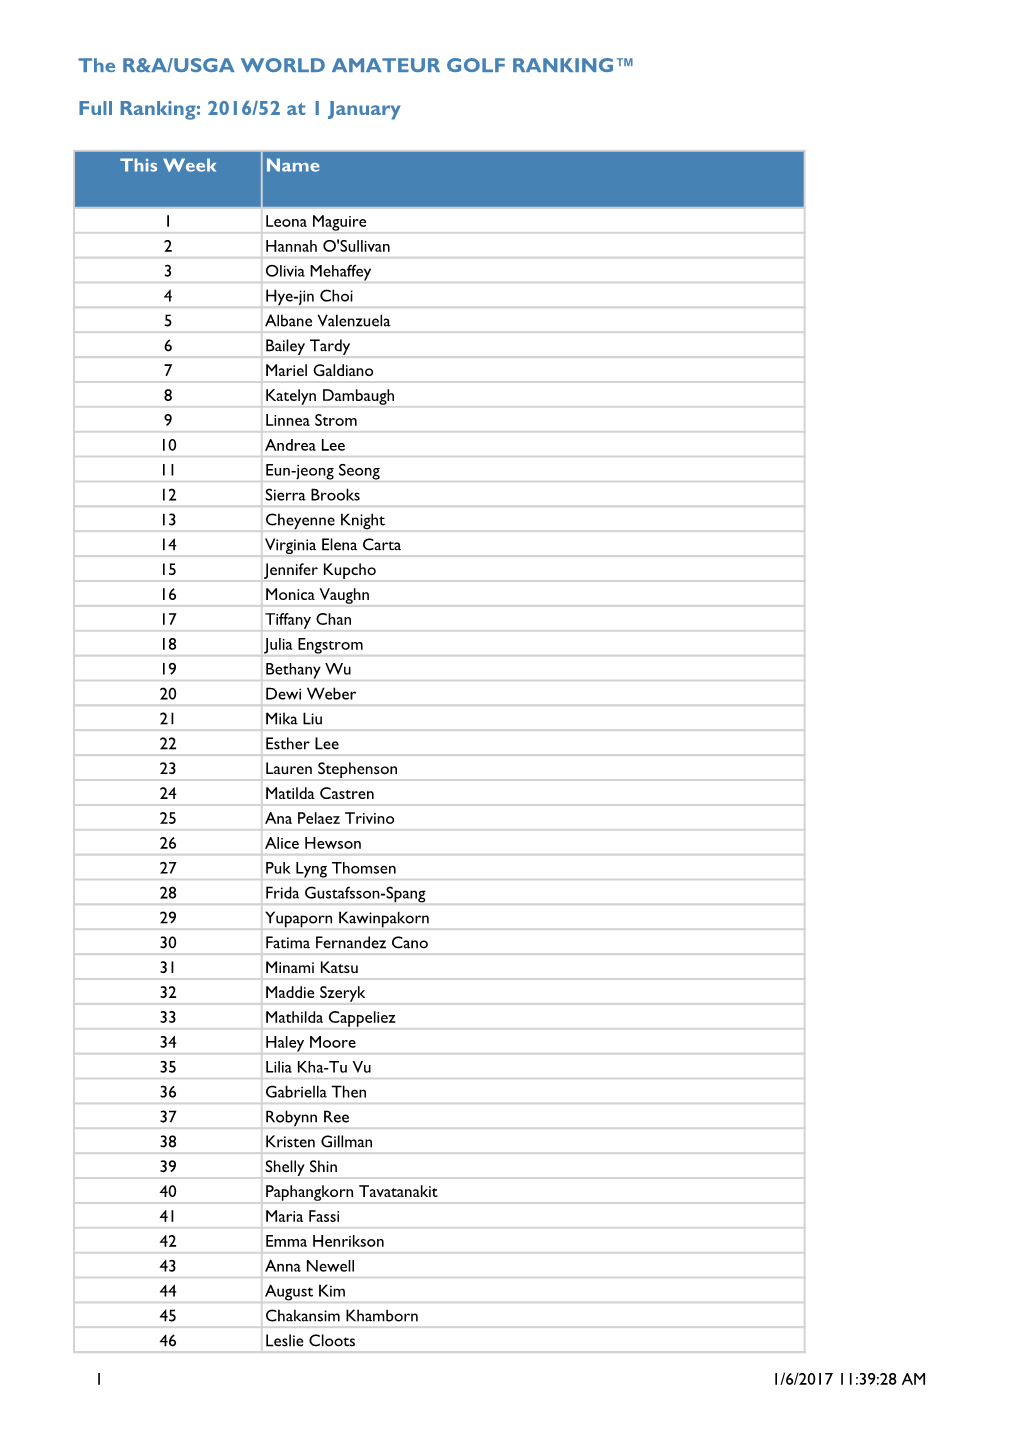 The R&A/USGA WORLD AMATEUR GOLF RANKING™ Full Ranking